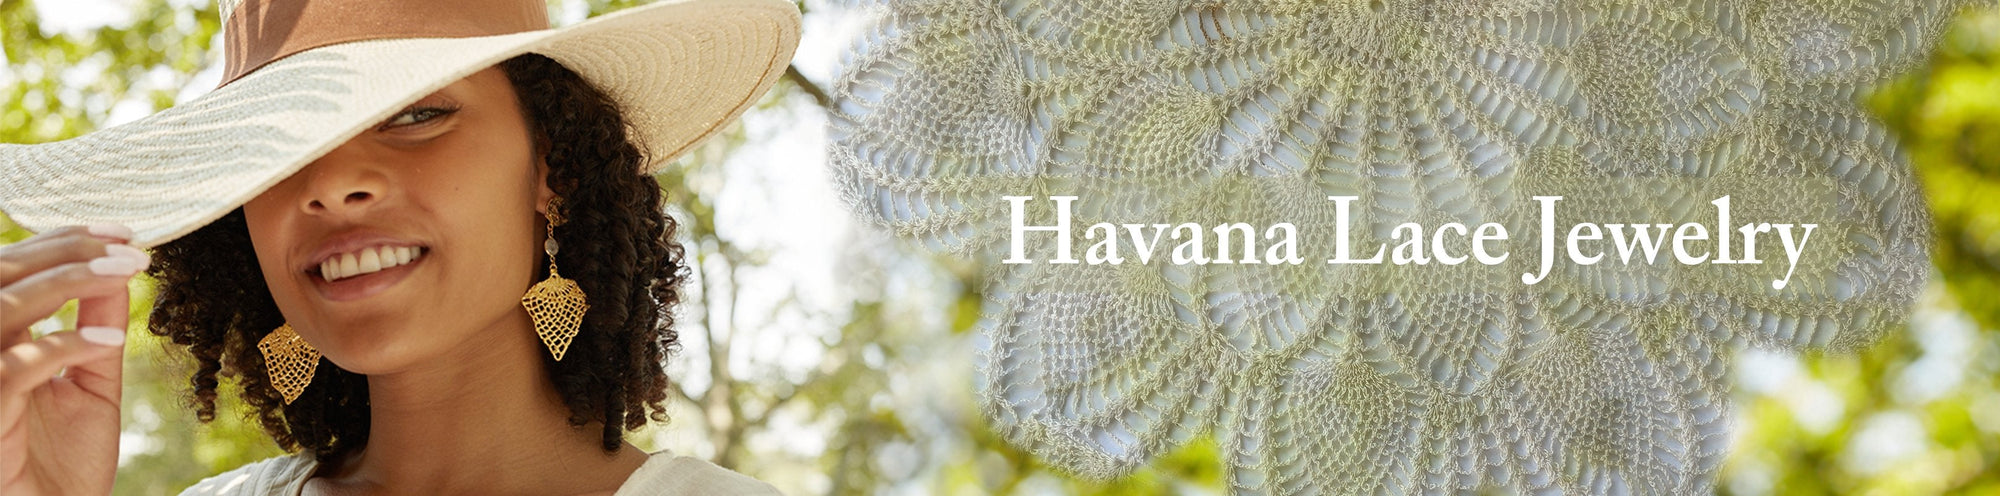 Havana Lace Jewelry